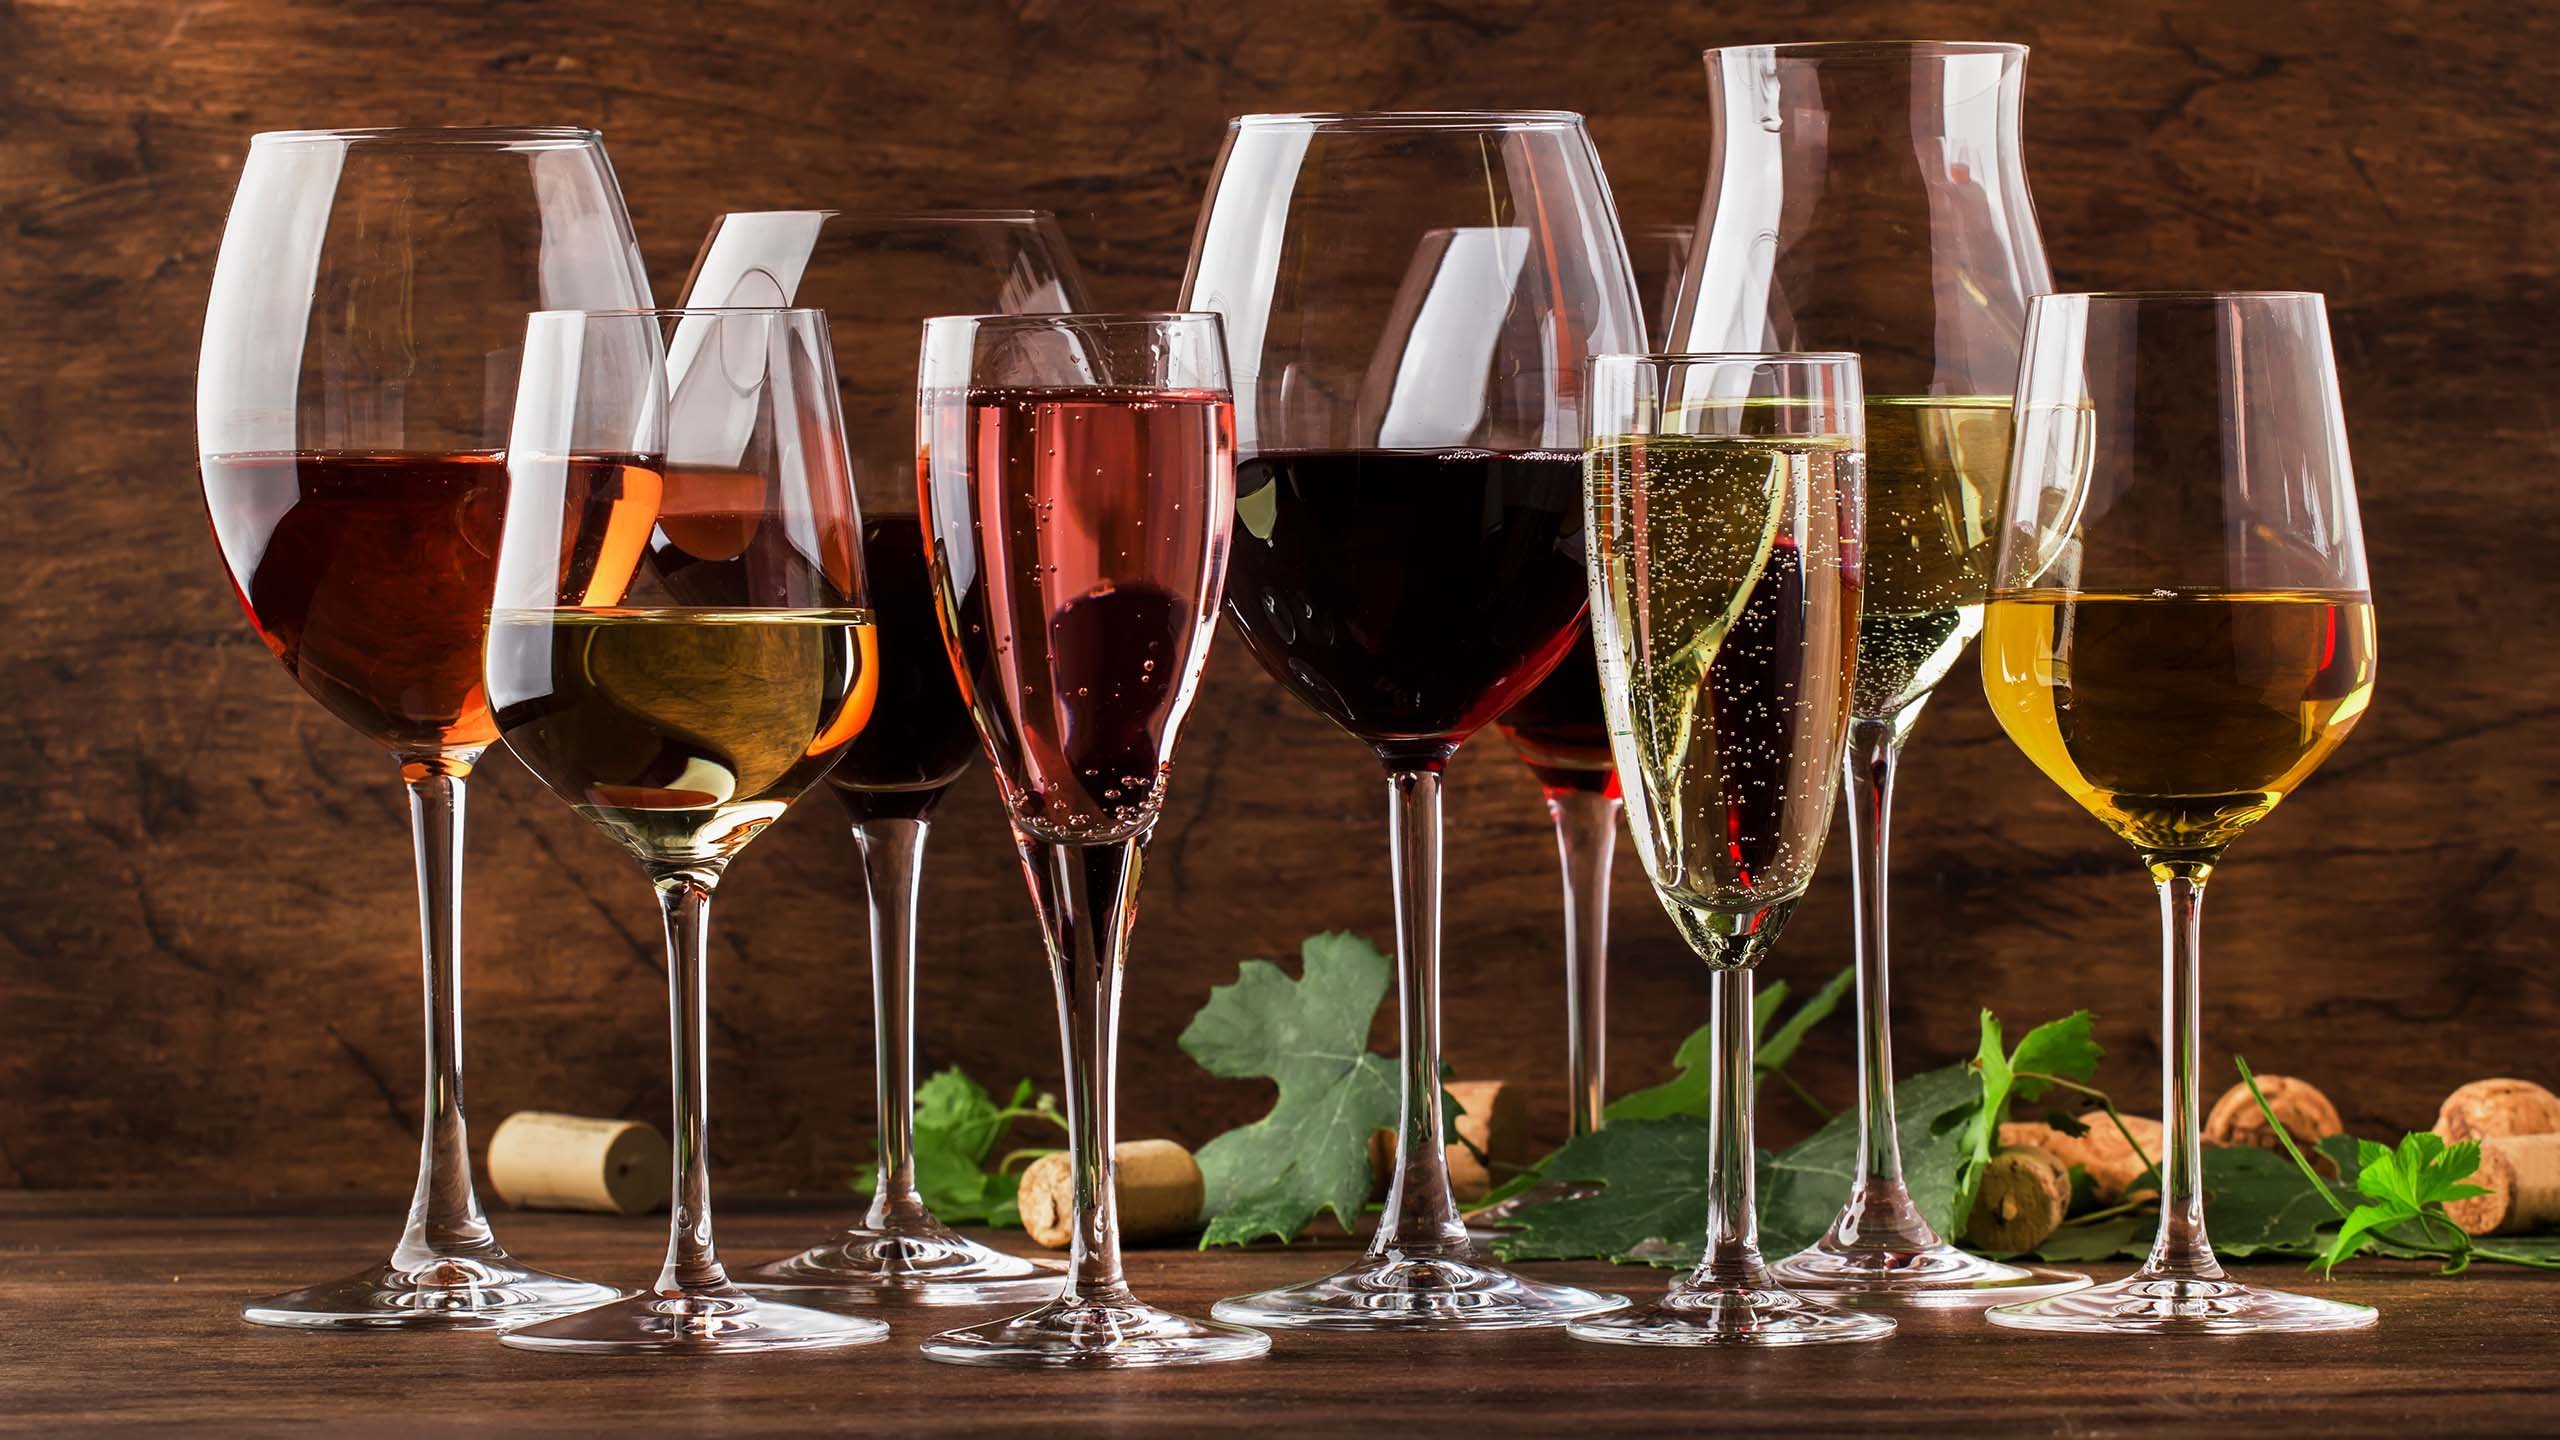 Different wines broader range of wine